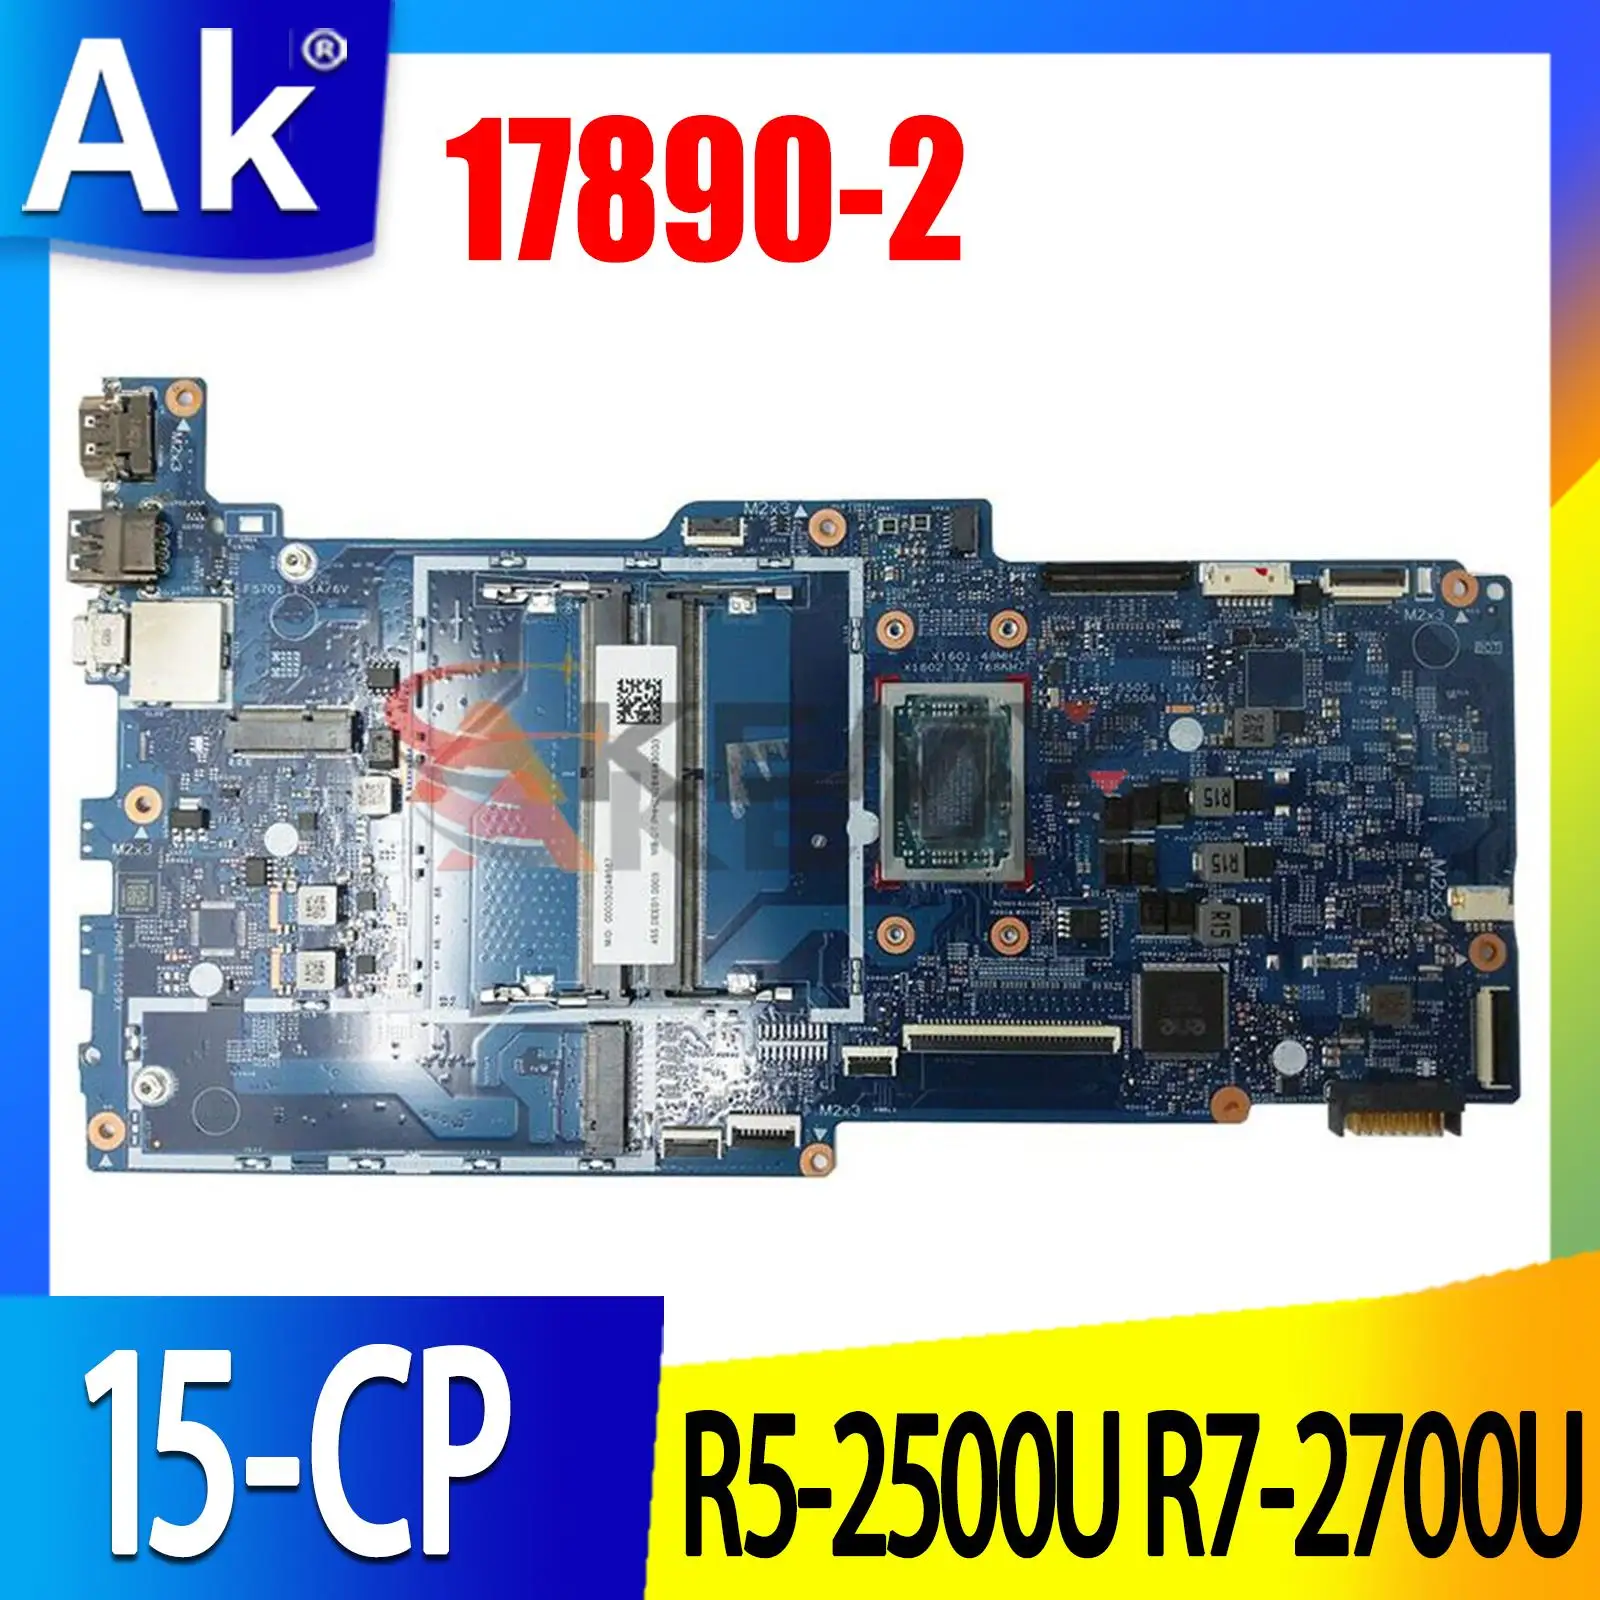 

Motherboard with R3-2300U R5-2500U R7-2700U AMD CPU UMA For HP ENVY X360 15-CP 15Z-CP Laptop Motherboard Mainboard 17890-2